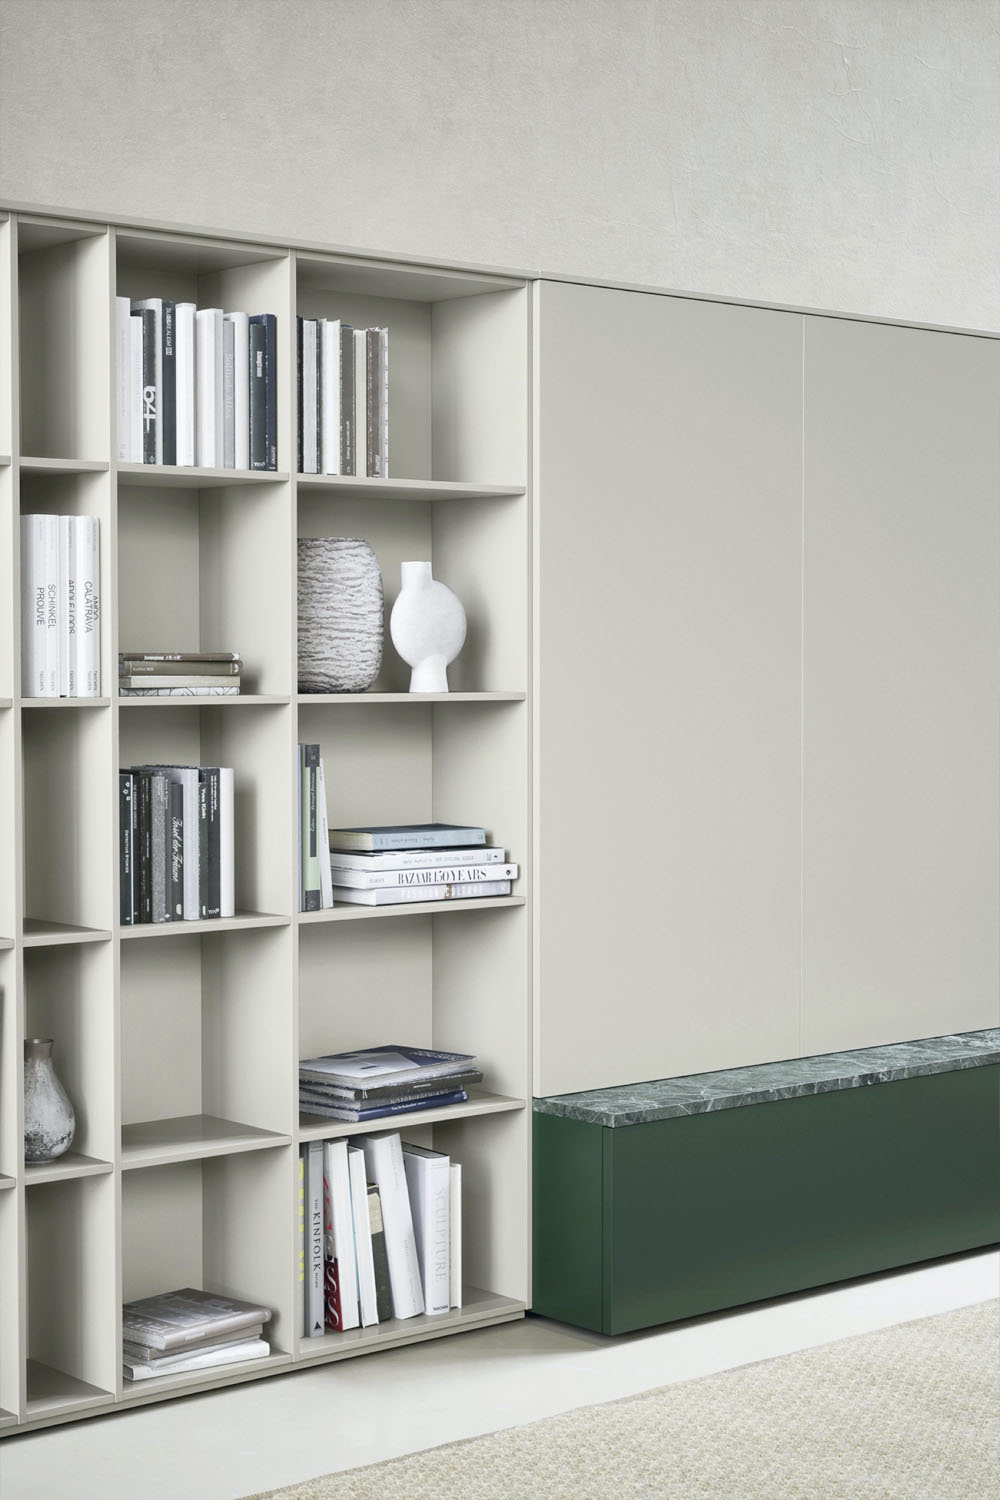 Krieder-wall12-bookcase-lifestyle-003